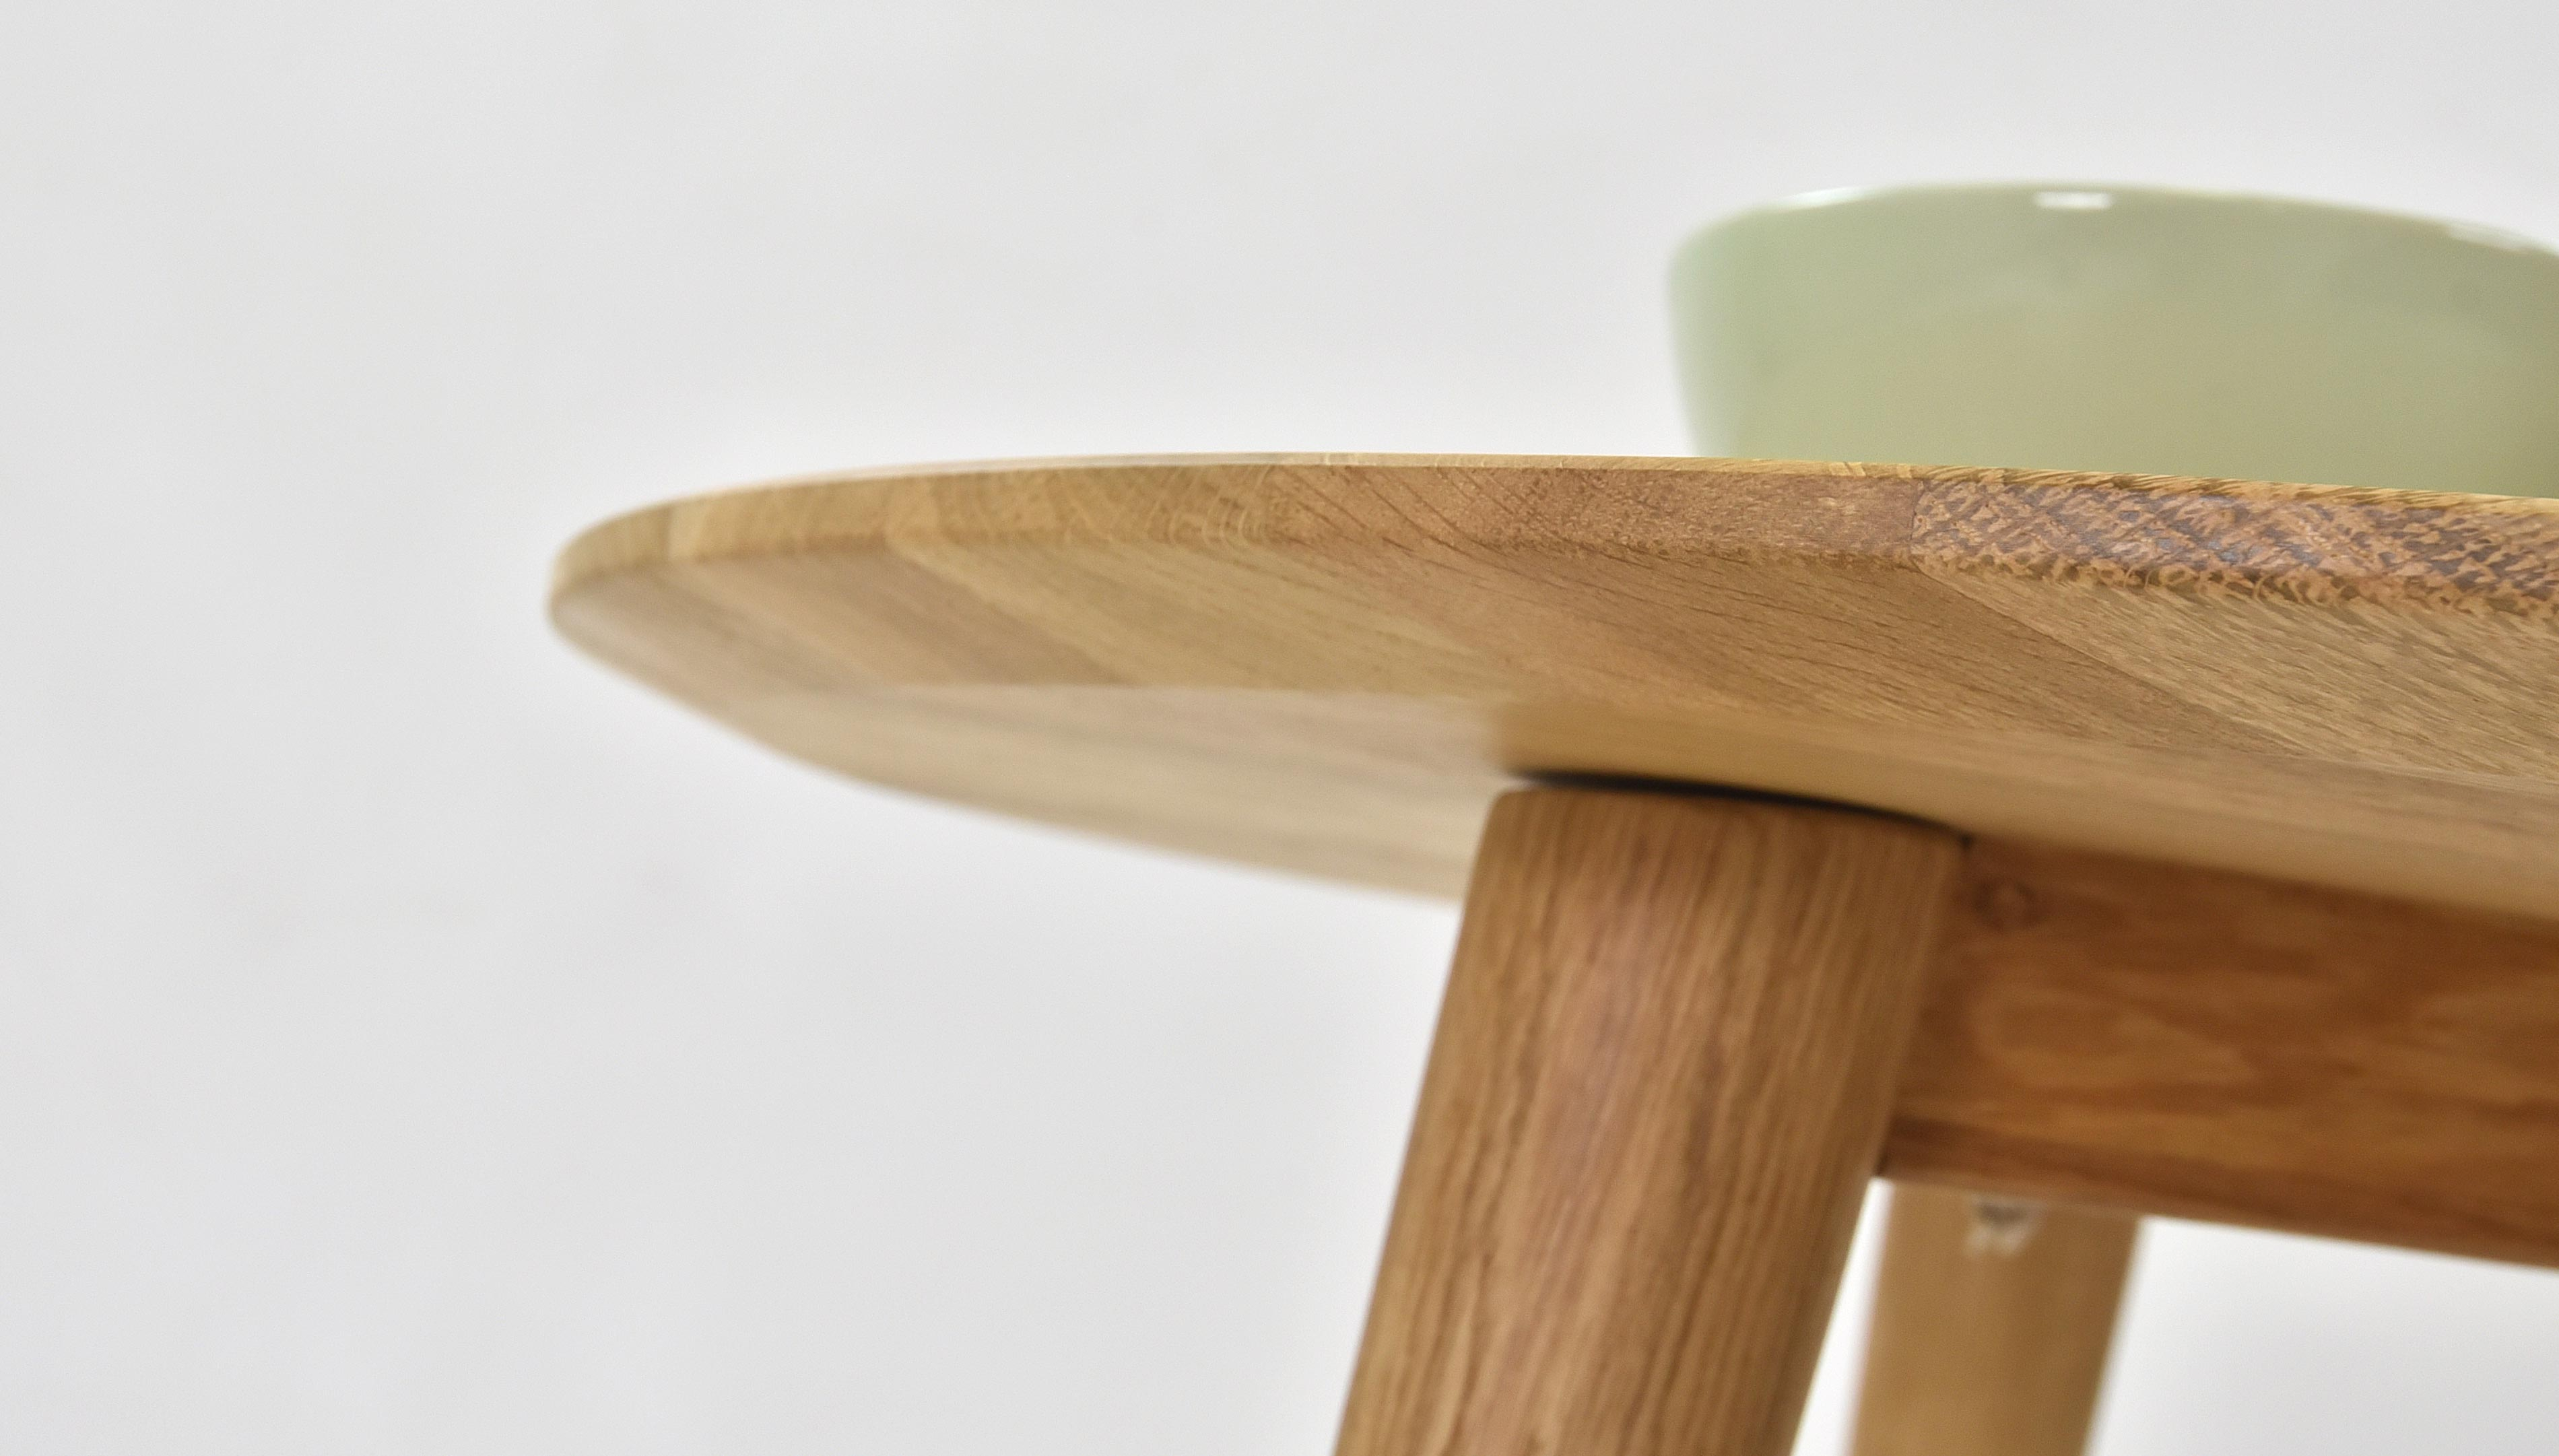 Kulatý konferenční stolek - masiv dub, Trondheinm